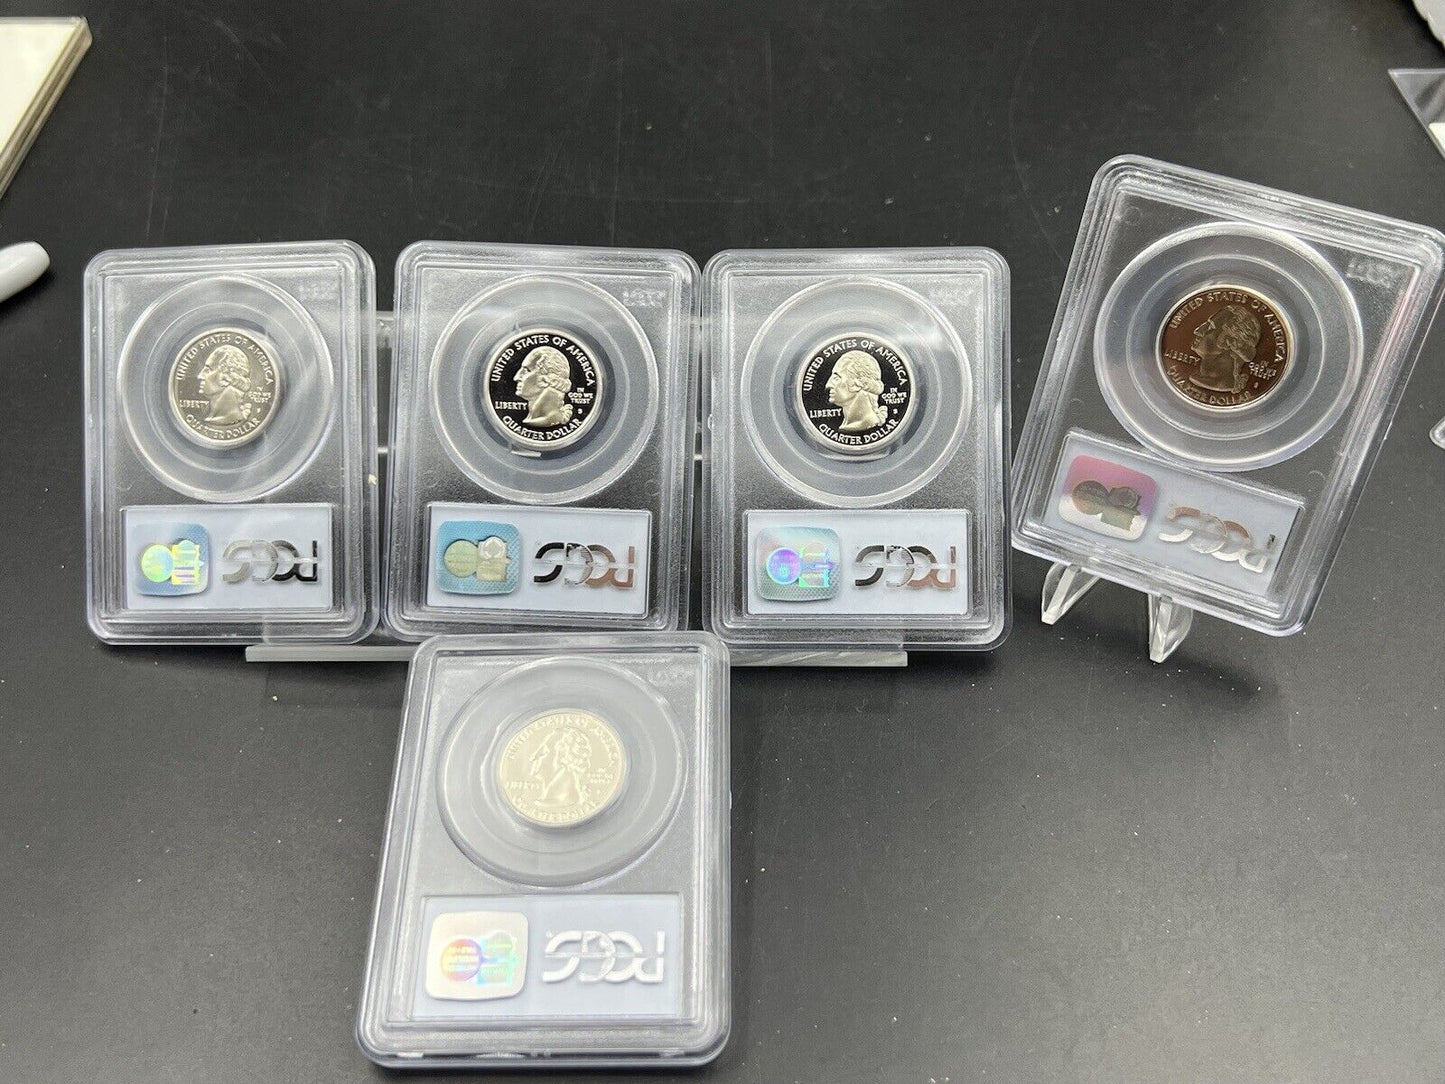 2002 S Complete 5 Coin CLAD Proof Quarter Set PCGS Graded PR69 DCAM